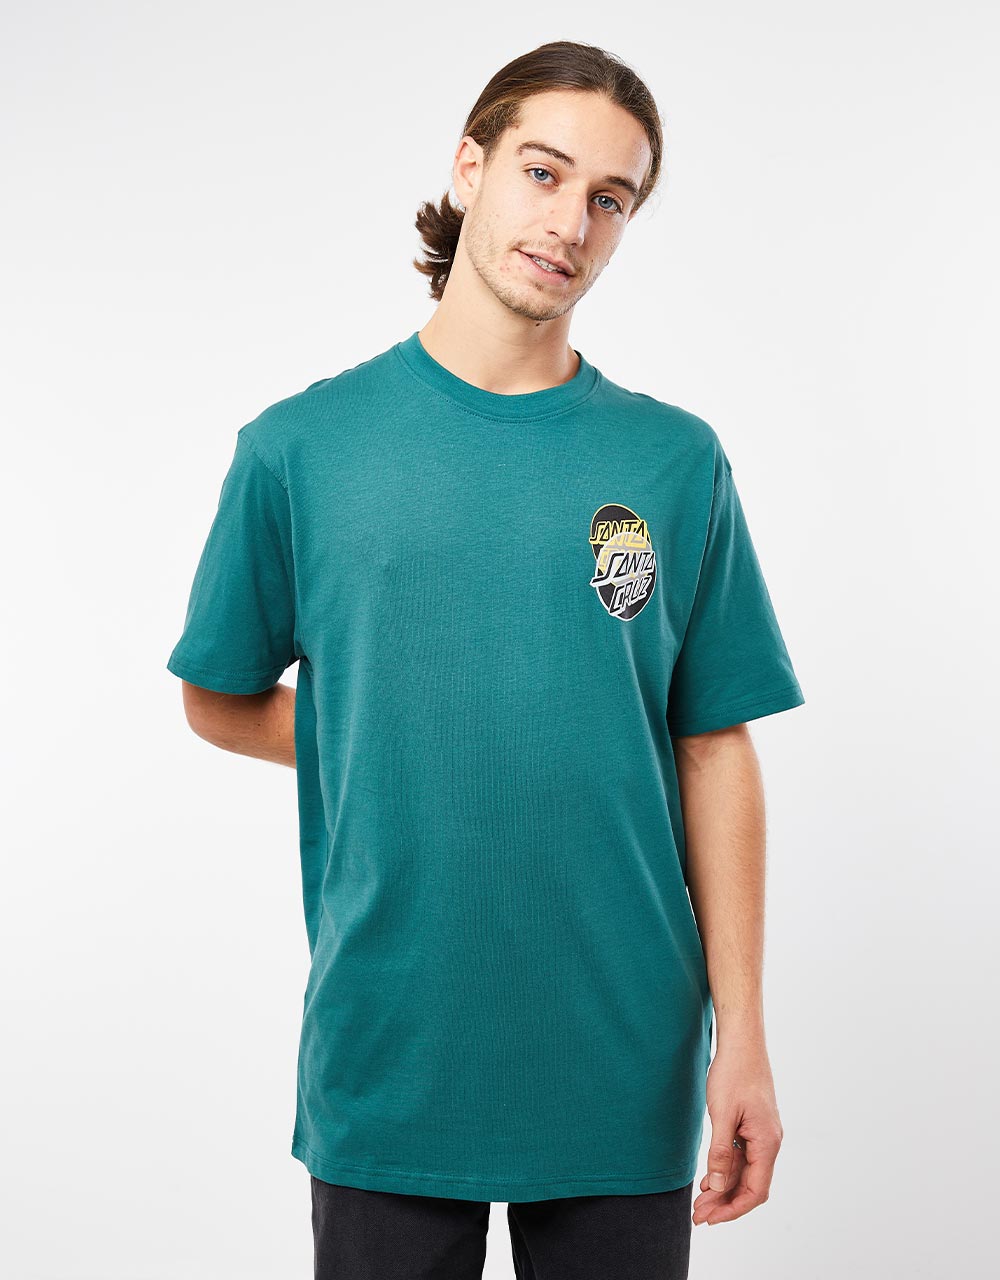 Santa Cruz Dissect Hand T-Shirt - Spruce